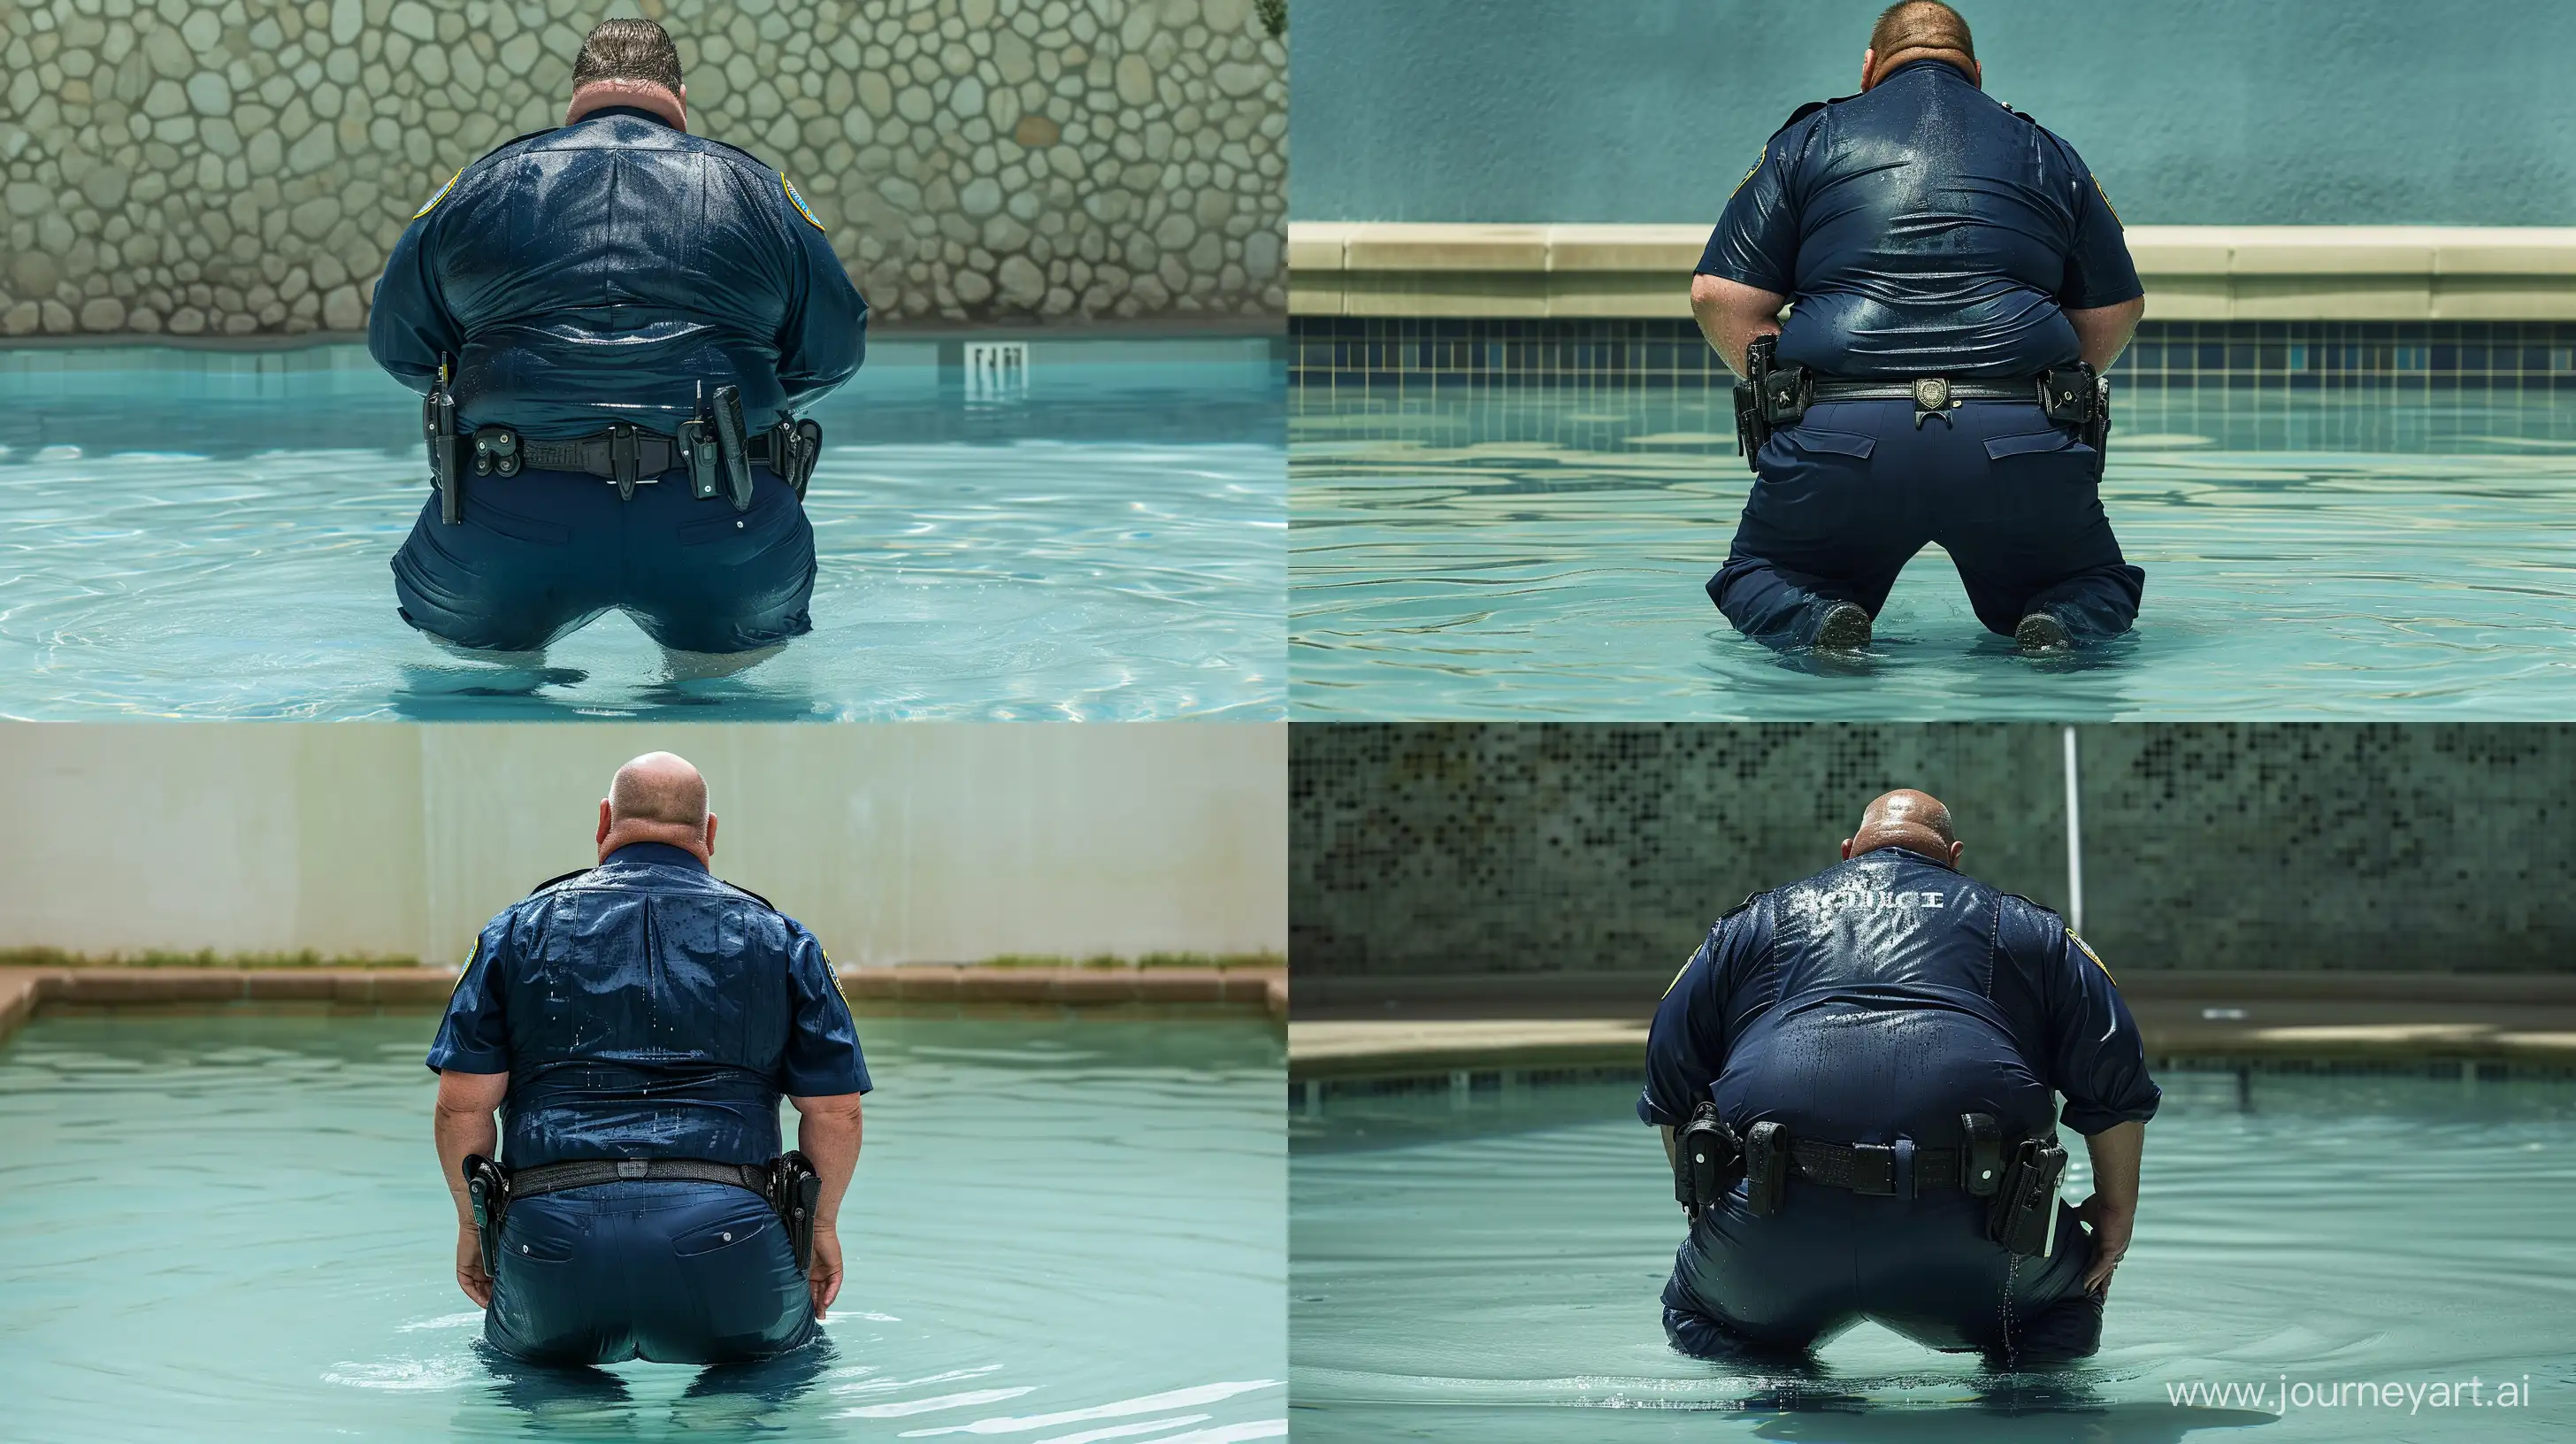 Elderly-Policeman-Kneeling-in-Water-Emotional-Moment-Captured